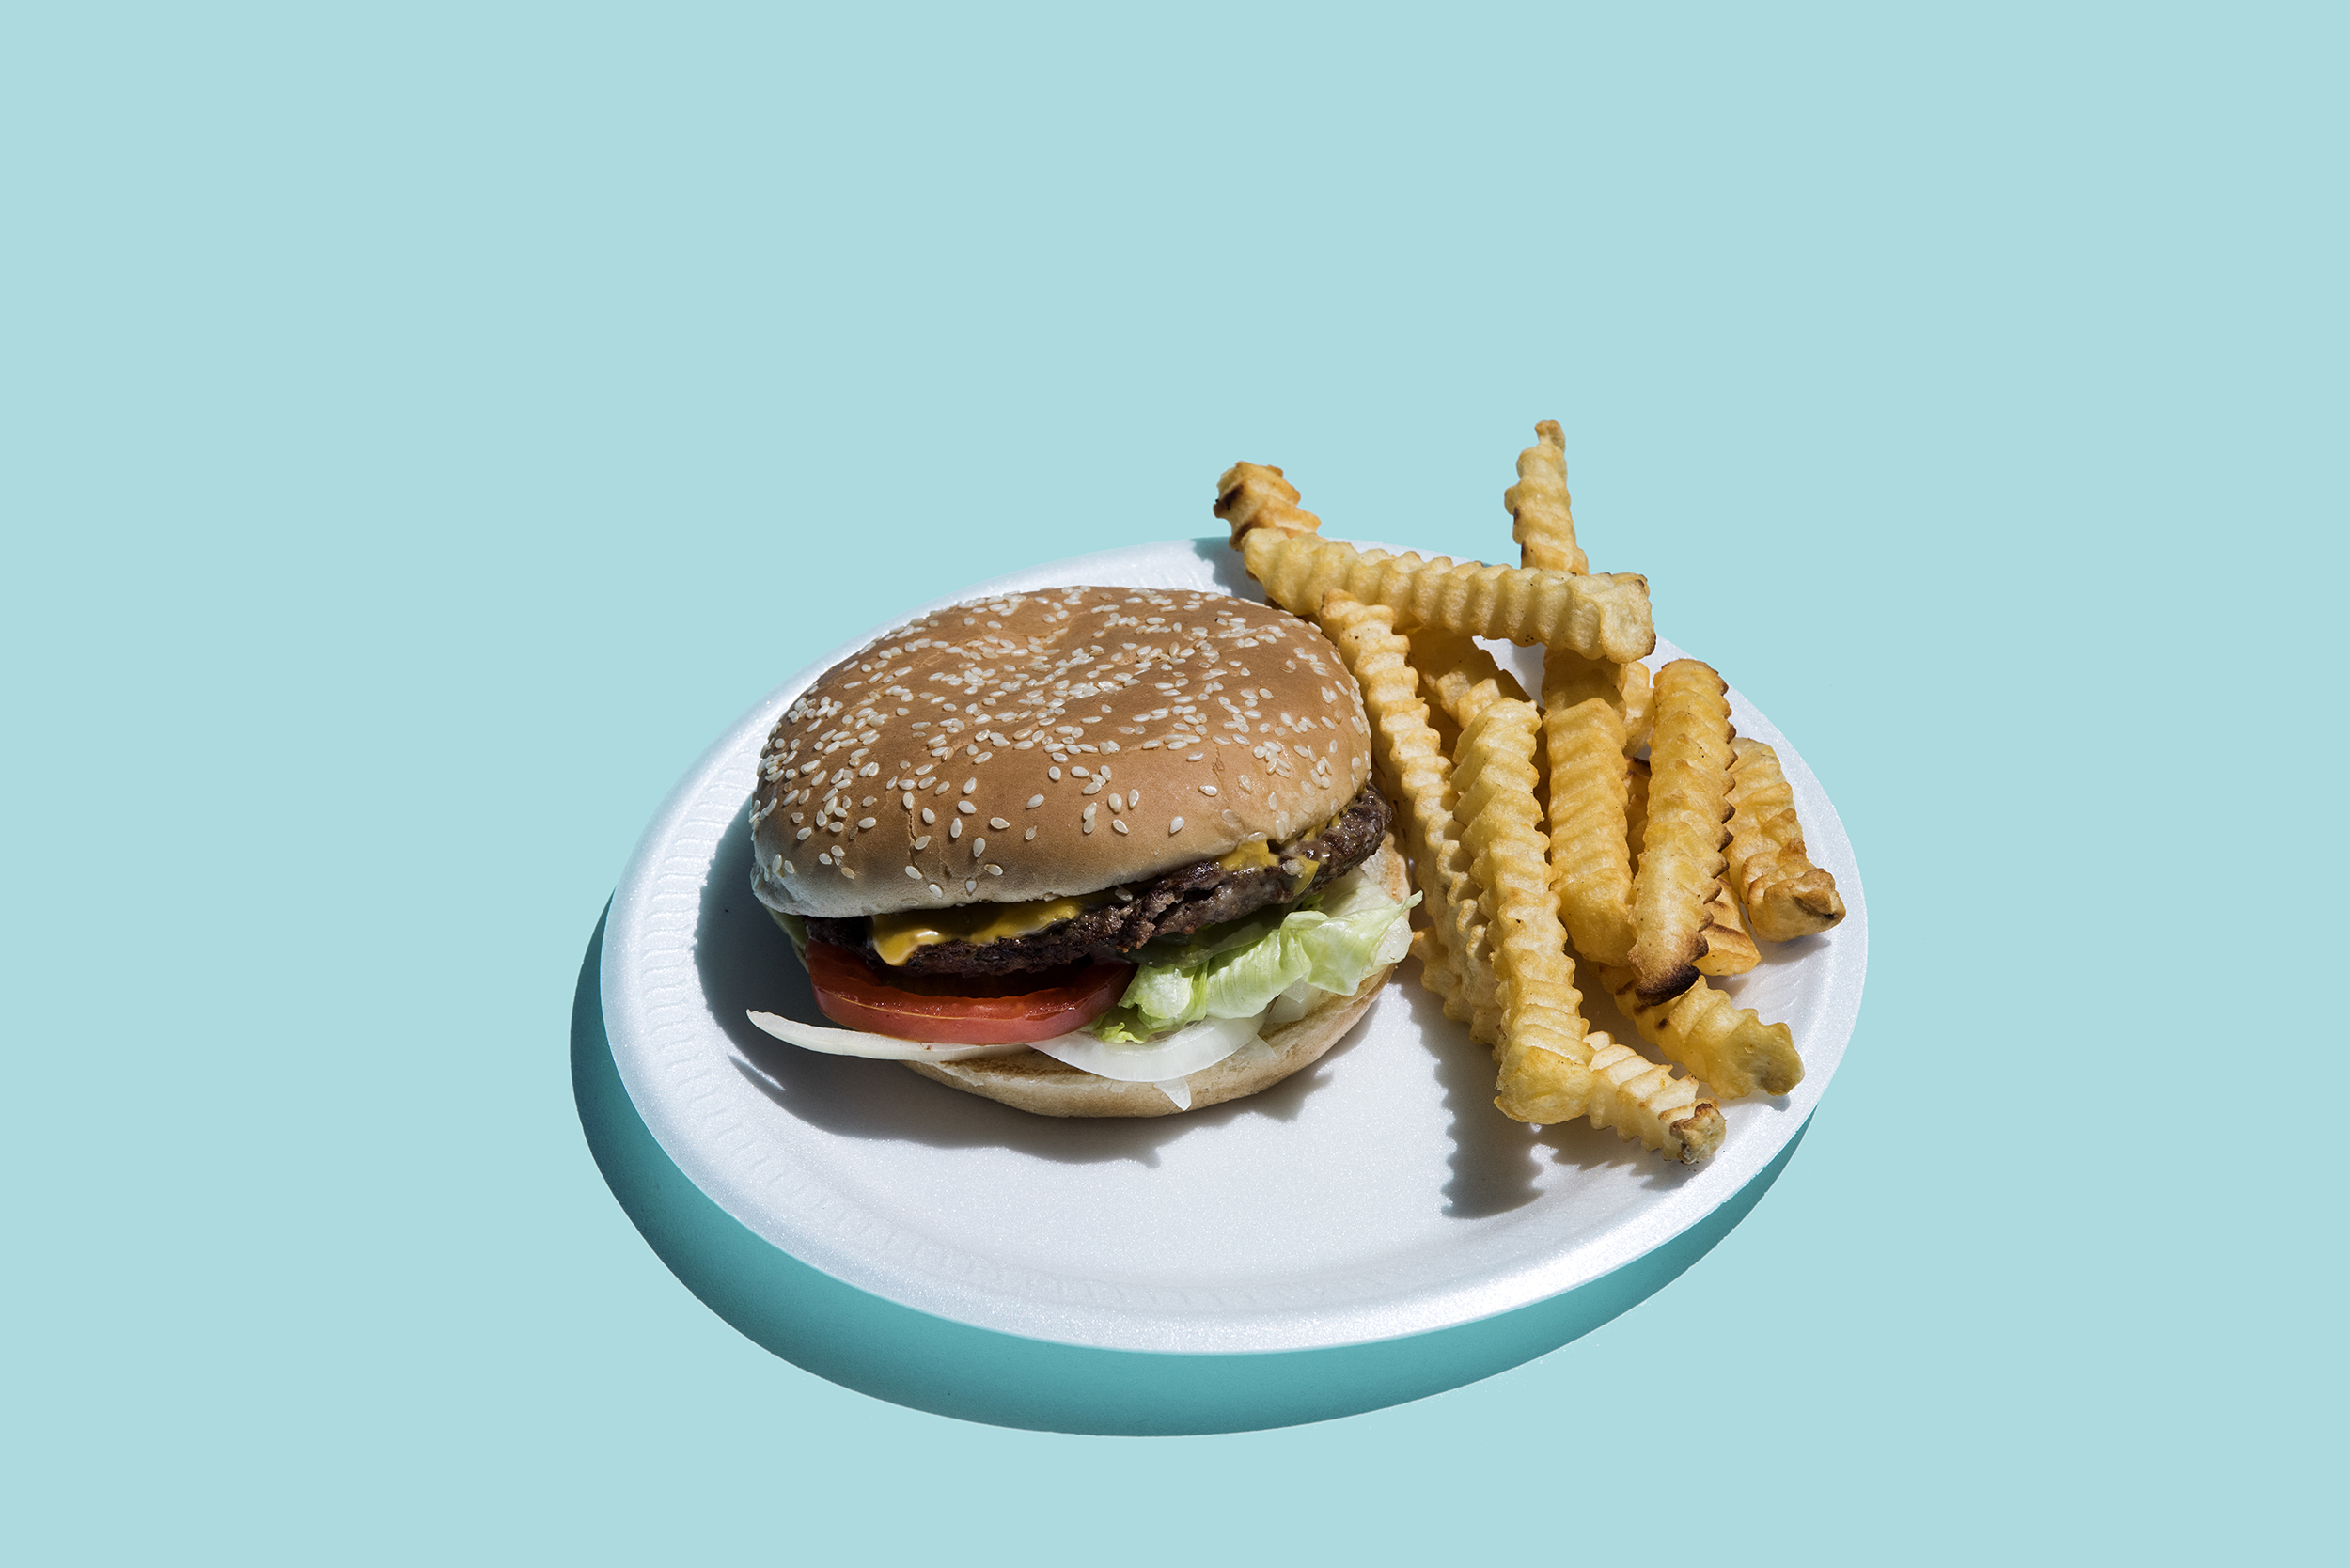 burger-fries-2-diet-junk-food-health-motto-stock